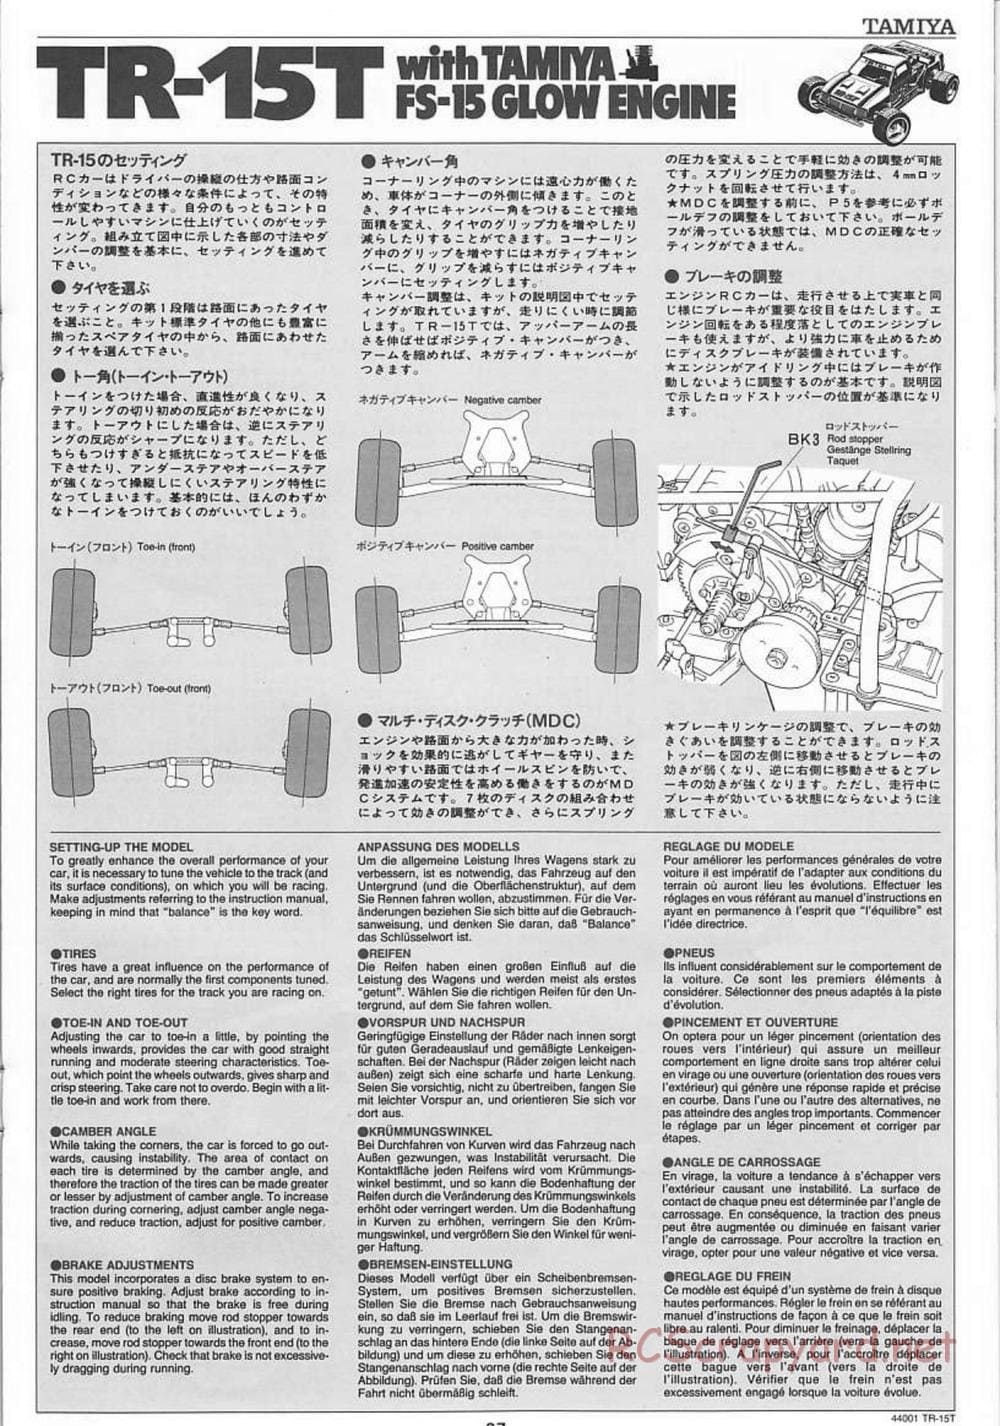 Tamiya - Stadium Racing Truck TR-15T Chassis - Manual - Page 27